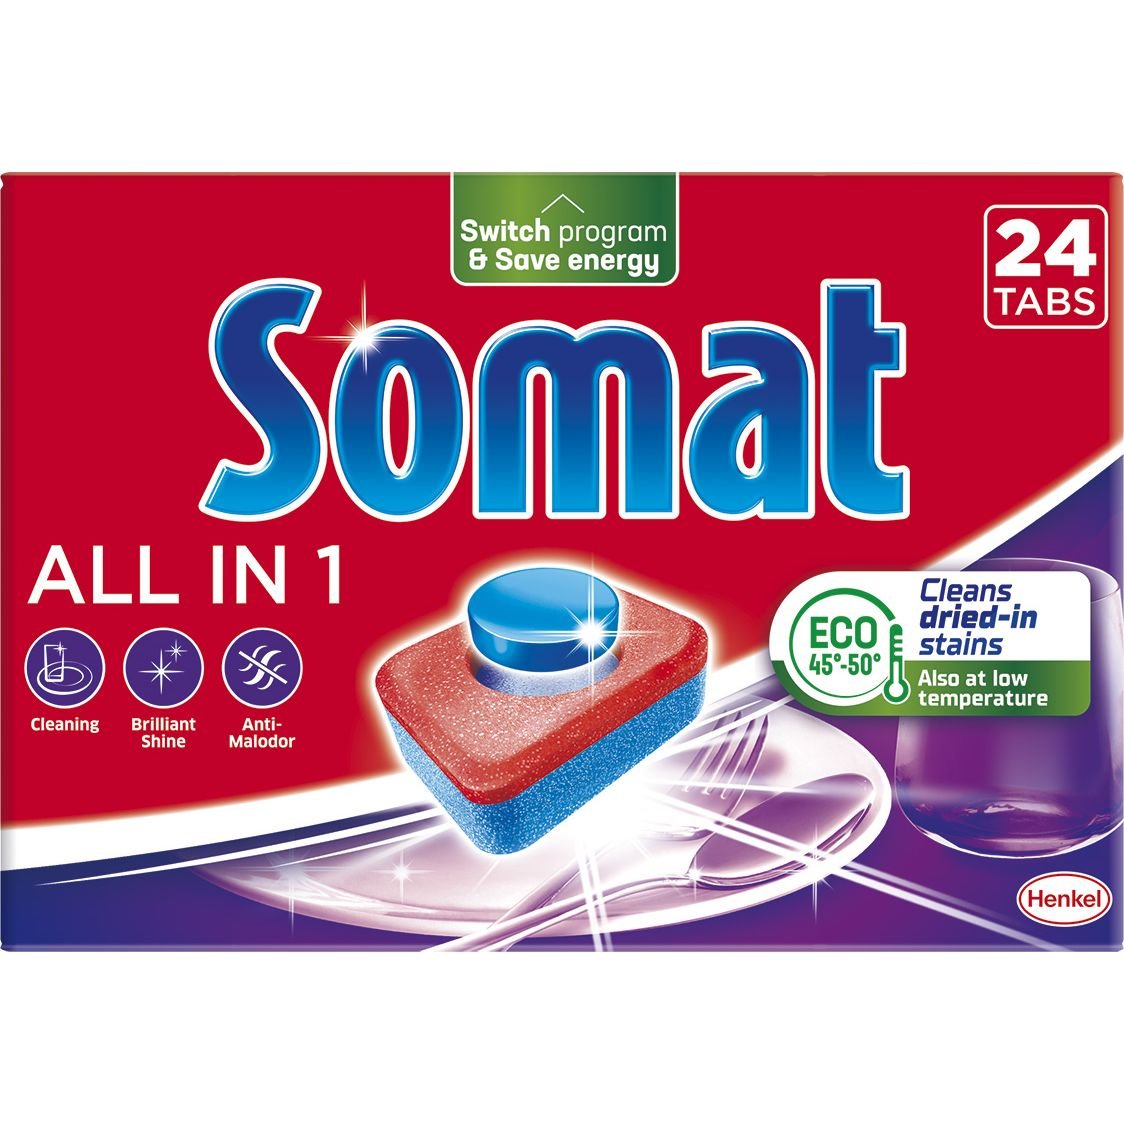 Капсули для посудомийної машини Somat Exellence All in one Все в 1 24 таблетки - фото 1